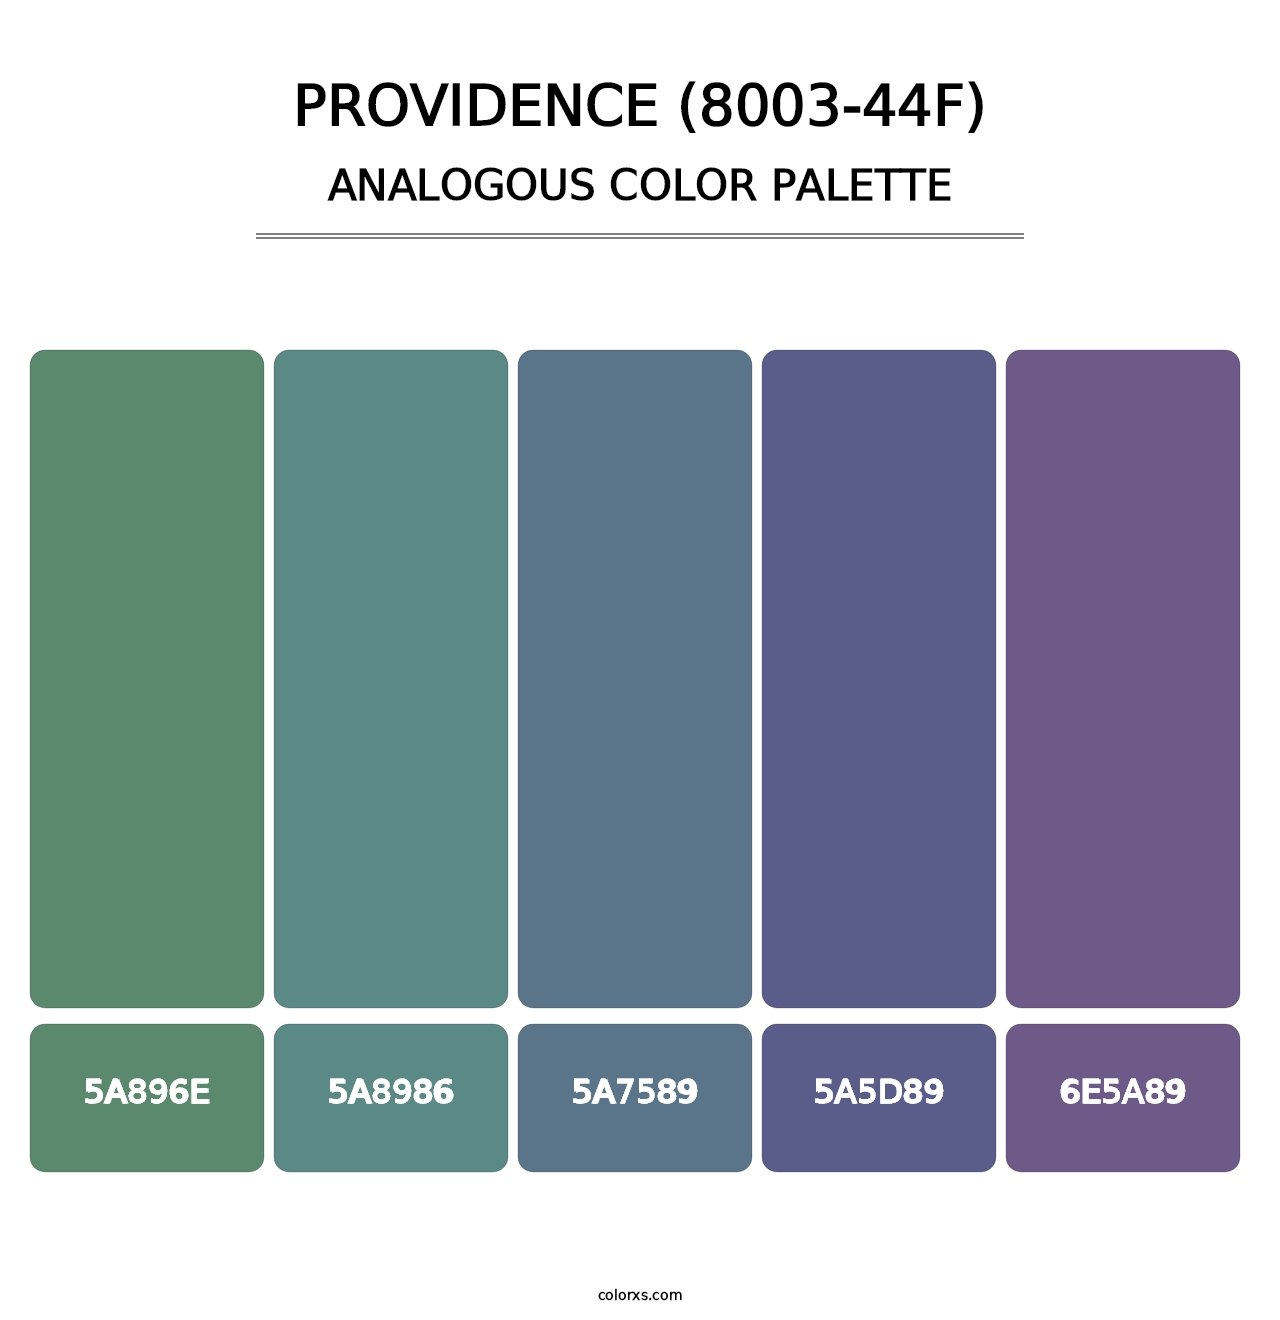 Providence (8003-44F) - Analogous Color Palette